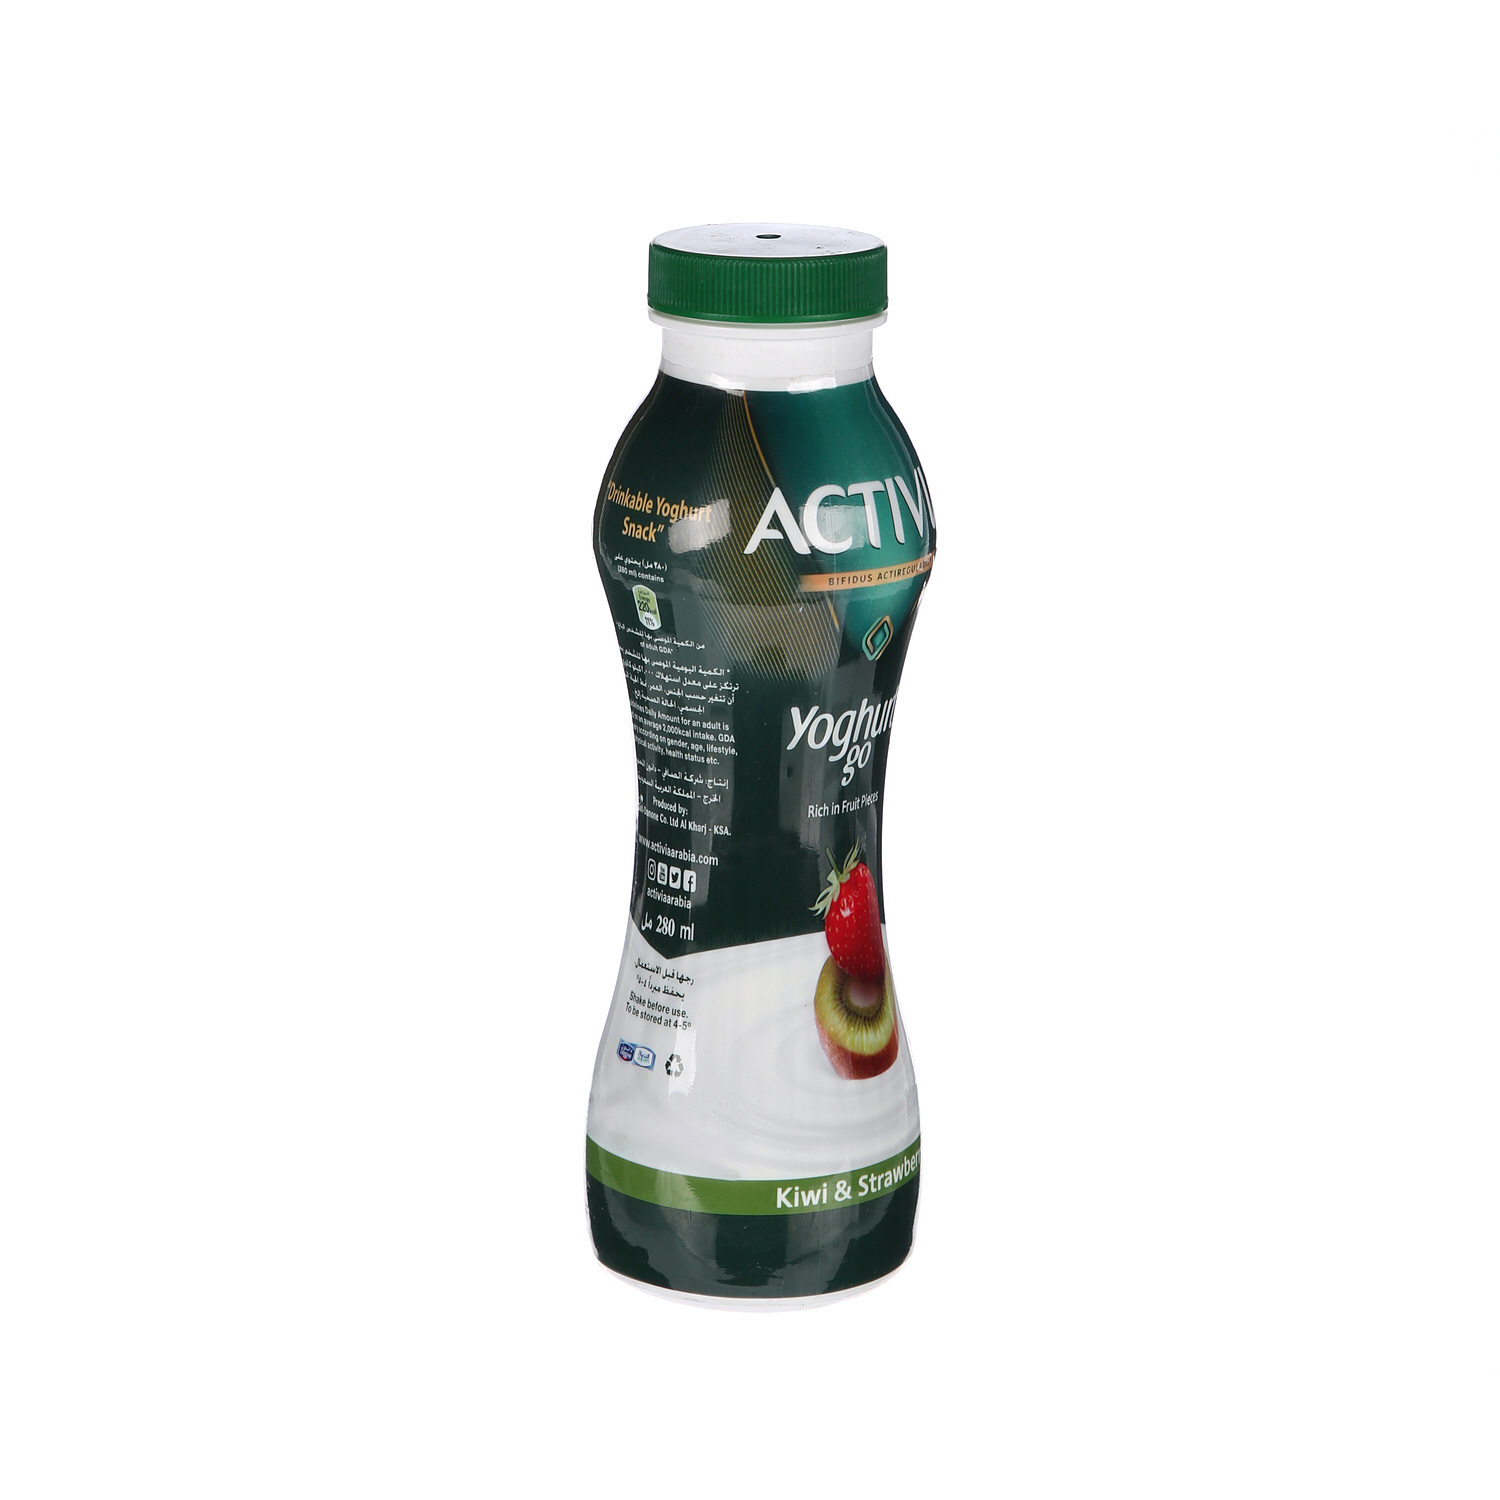 Al Safi Danone Actvia Drink Strawberry & Kiwi 280 ml